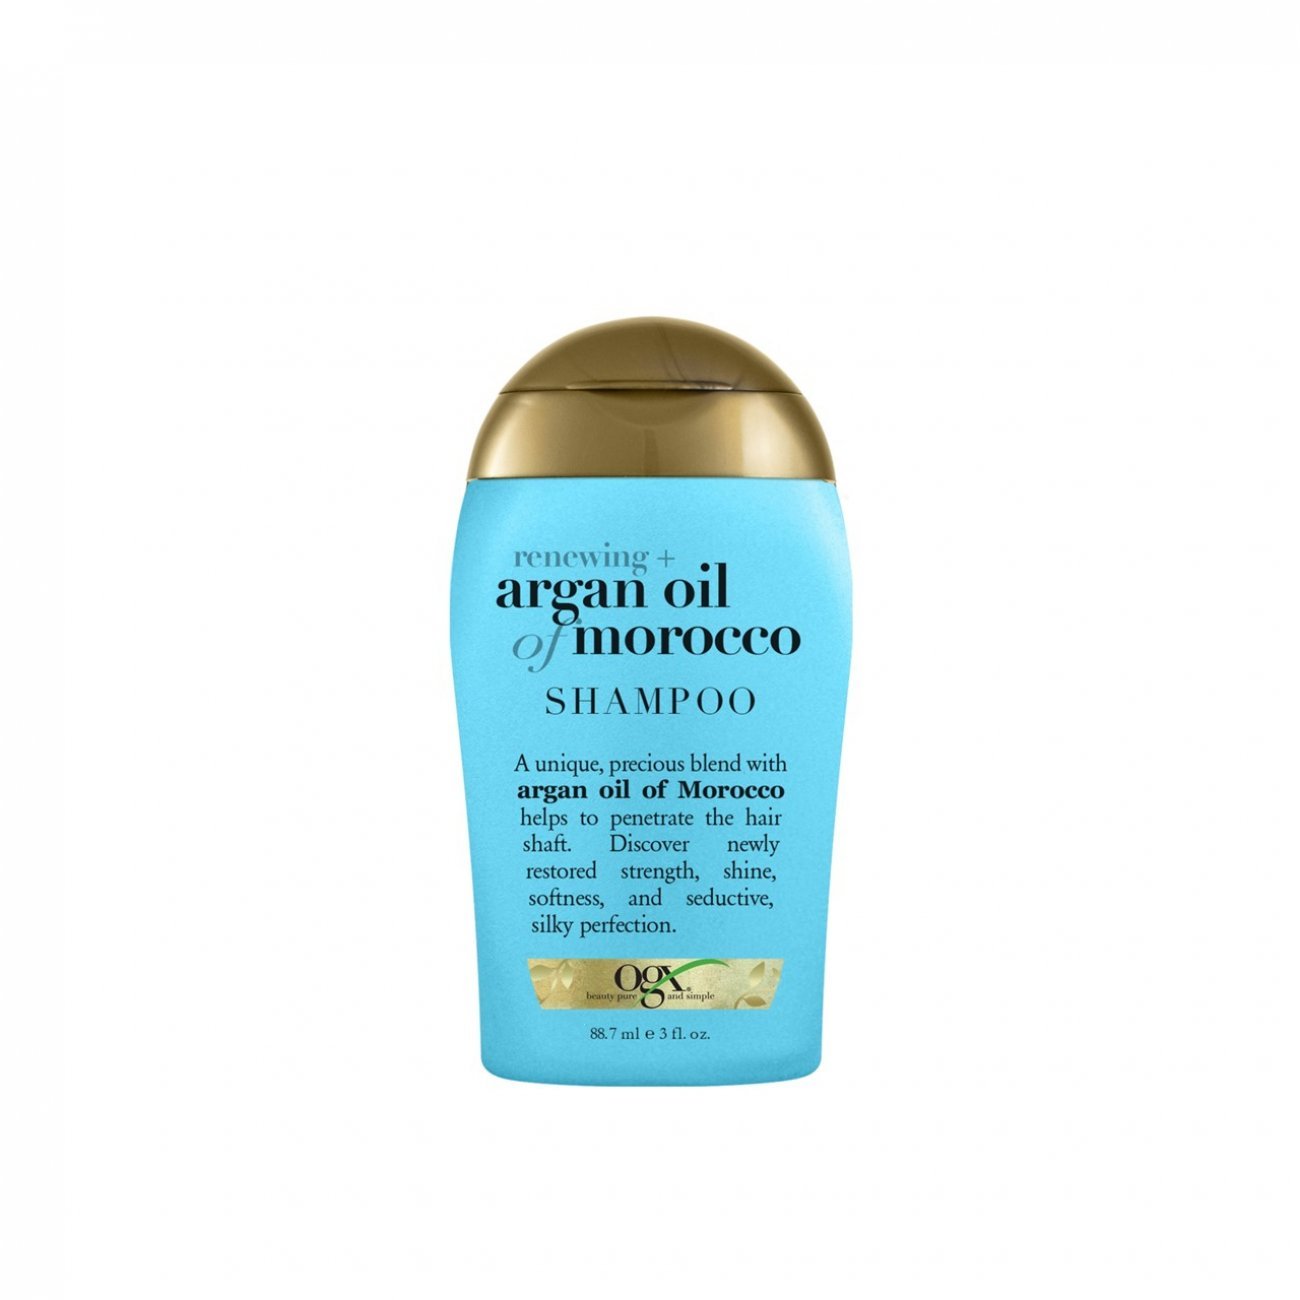 slette Nødvendig Abe Buy OGX Renewing + Argan Oil of Morocco Shampoo · USA